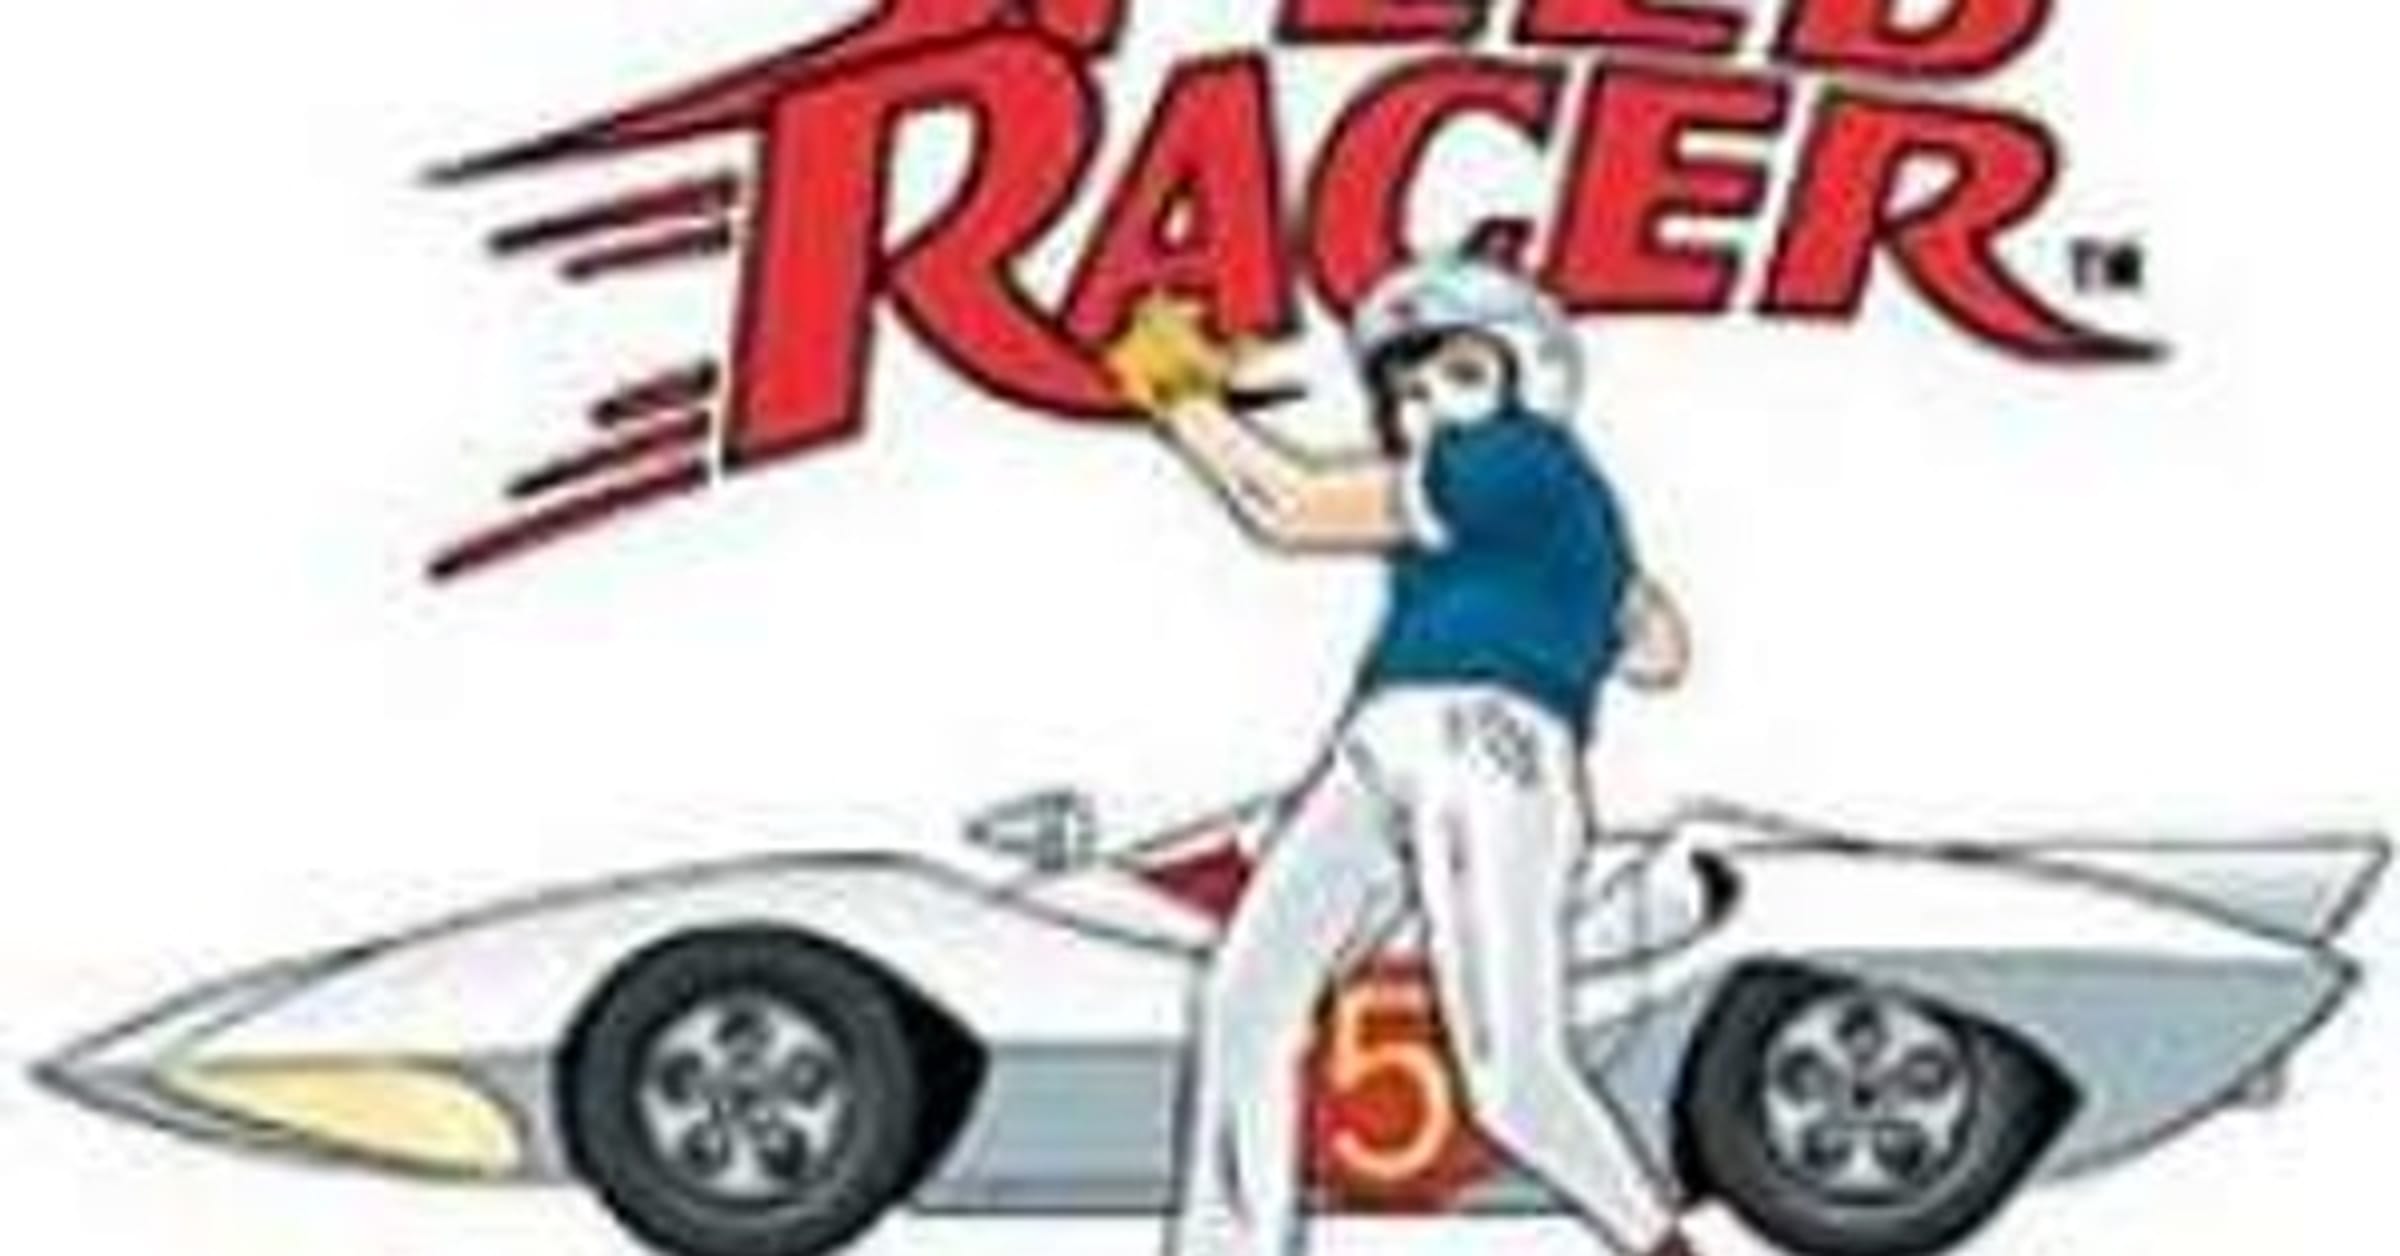 speed racer cartoon characters